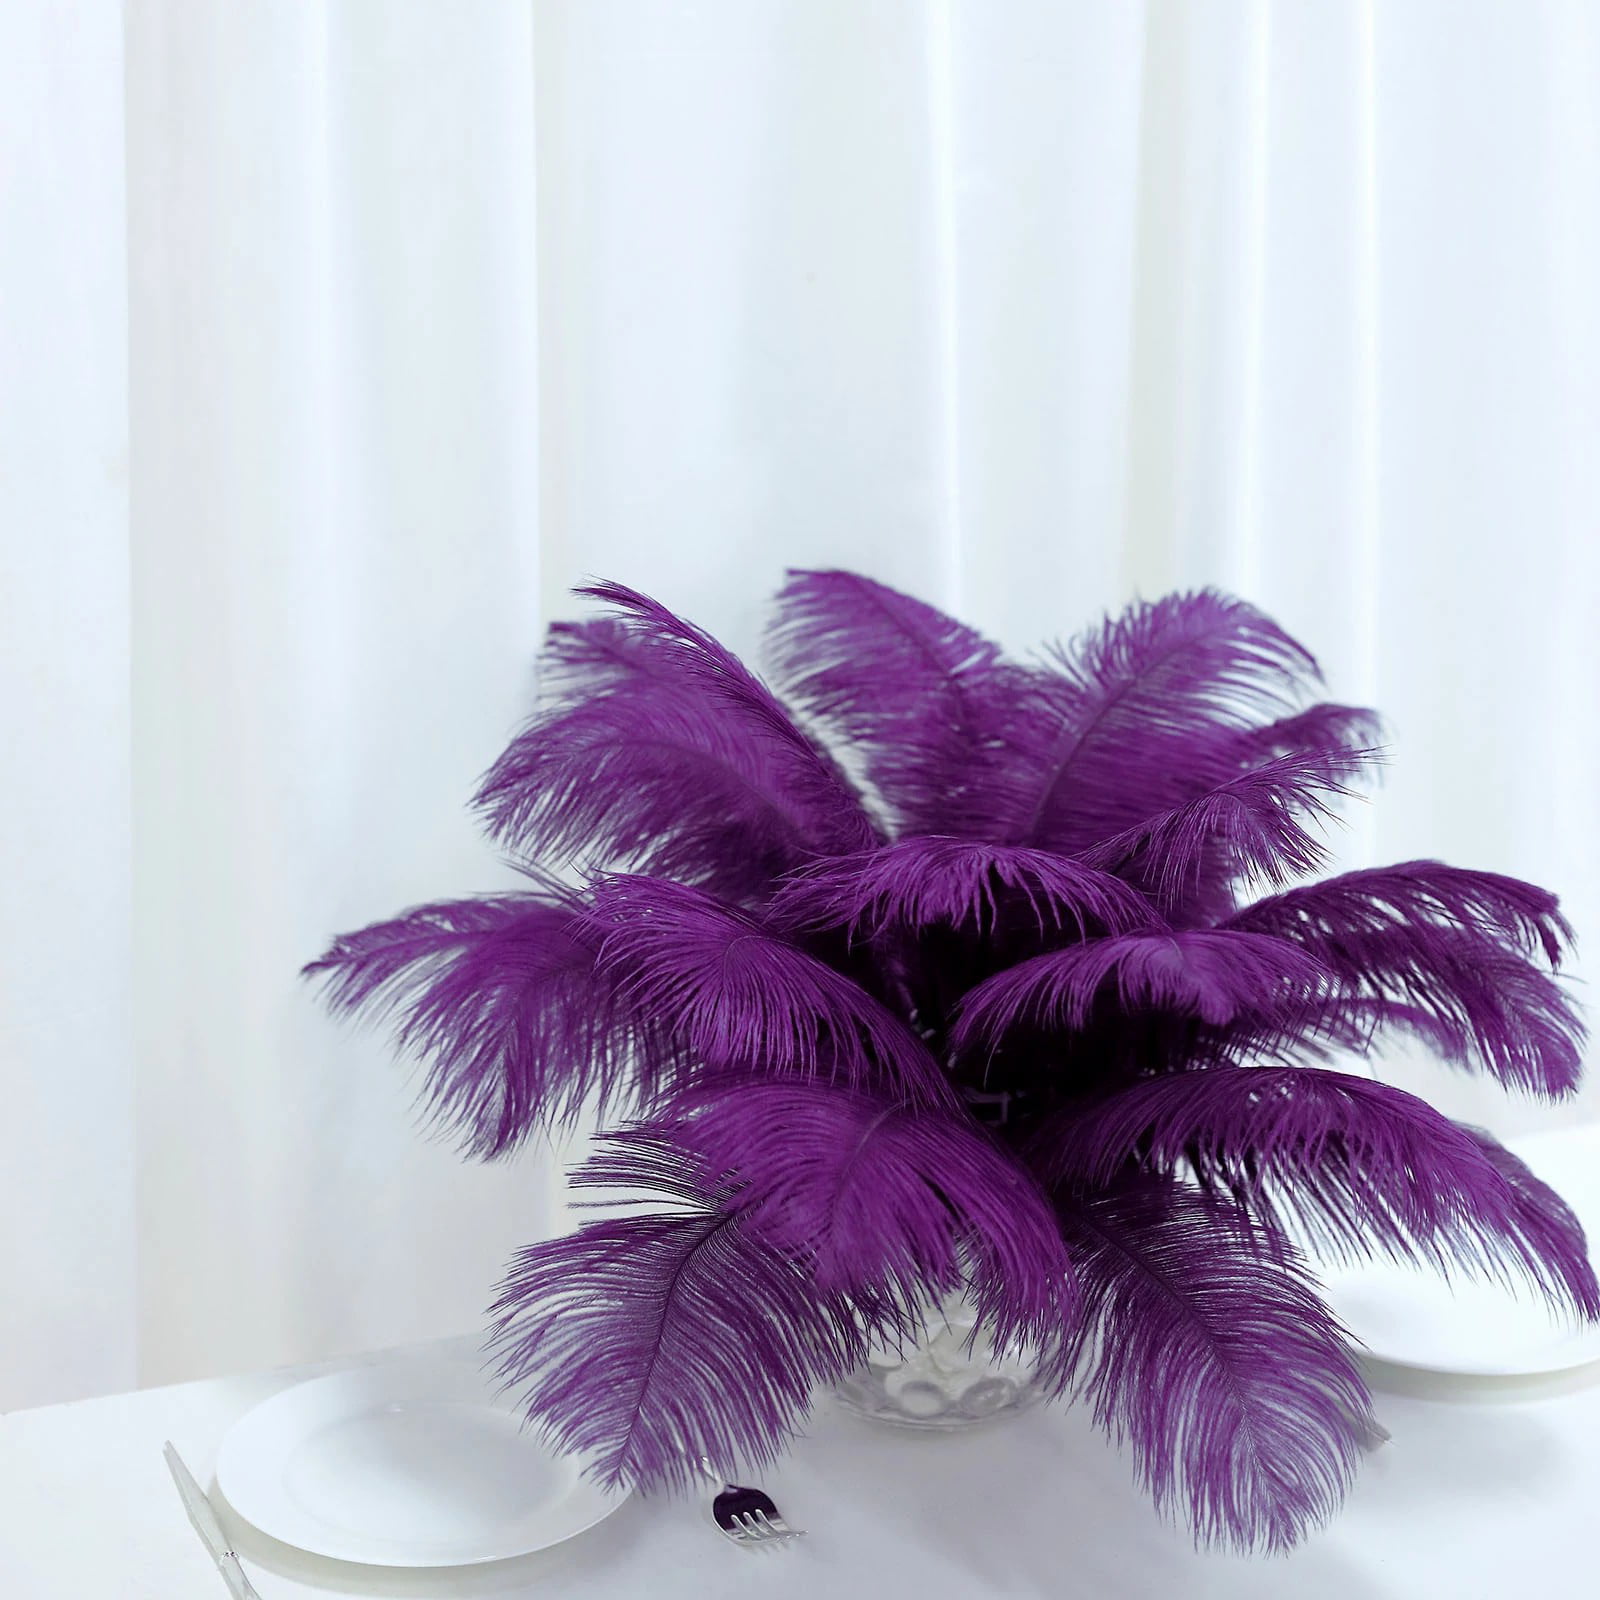 Ballinger Light Purple Ostrich Feathers - 24Pcs 10-12inch Feathers for  Party Centerpieces, Flower Arrangement and Home Decor